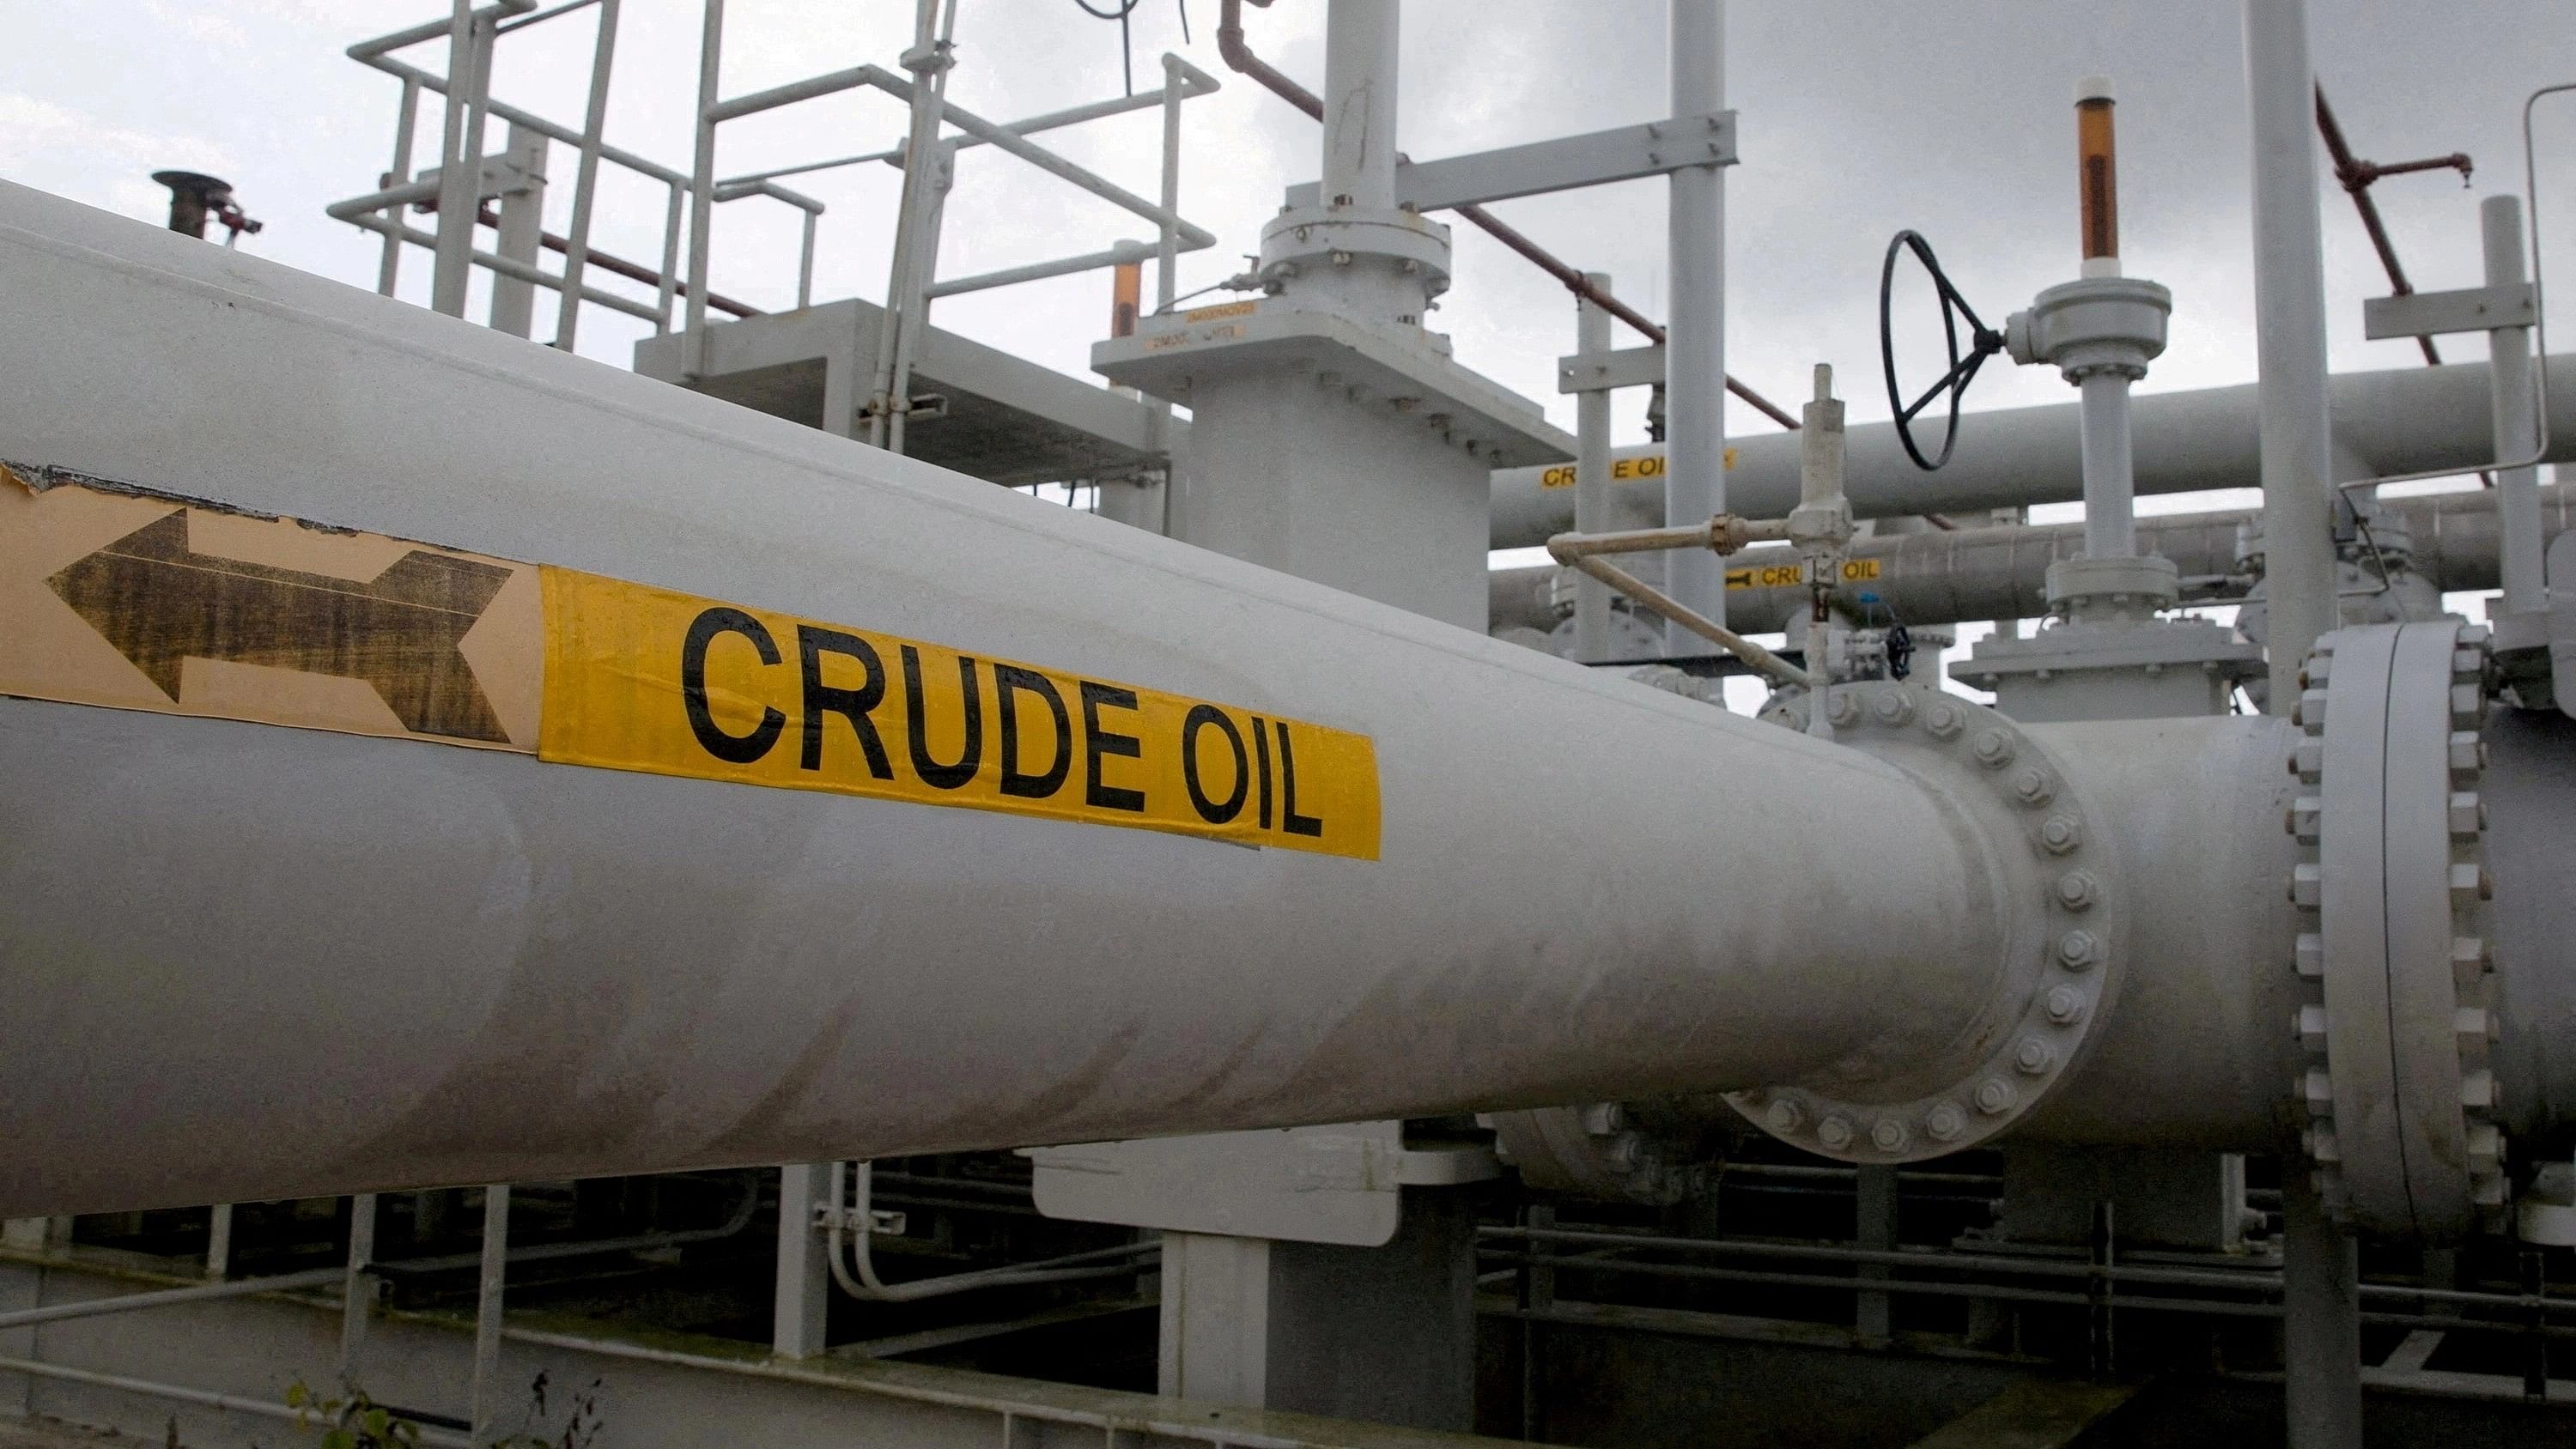 <div class="paragraphs"><p>Representative image showing crude oil pipeline.</p></div>